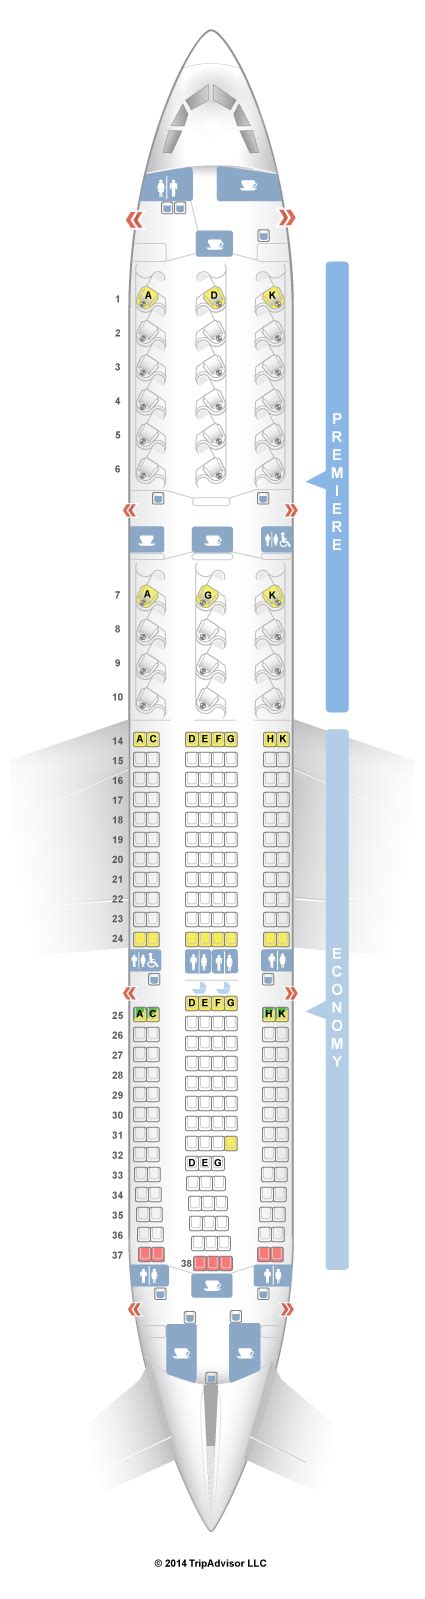 Seatguru Seat Map Jet Airways Airbus A330 200 332 V1